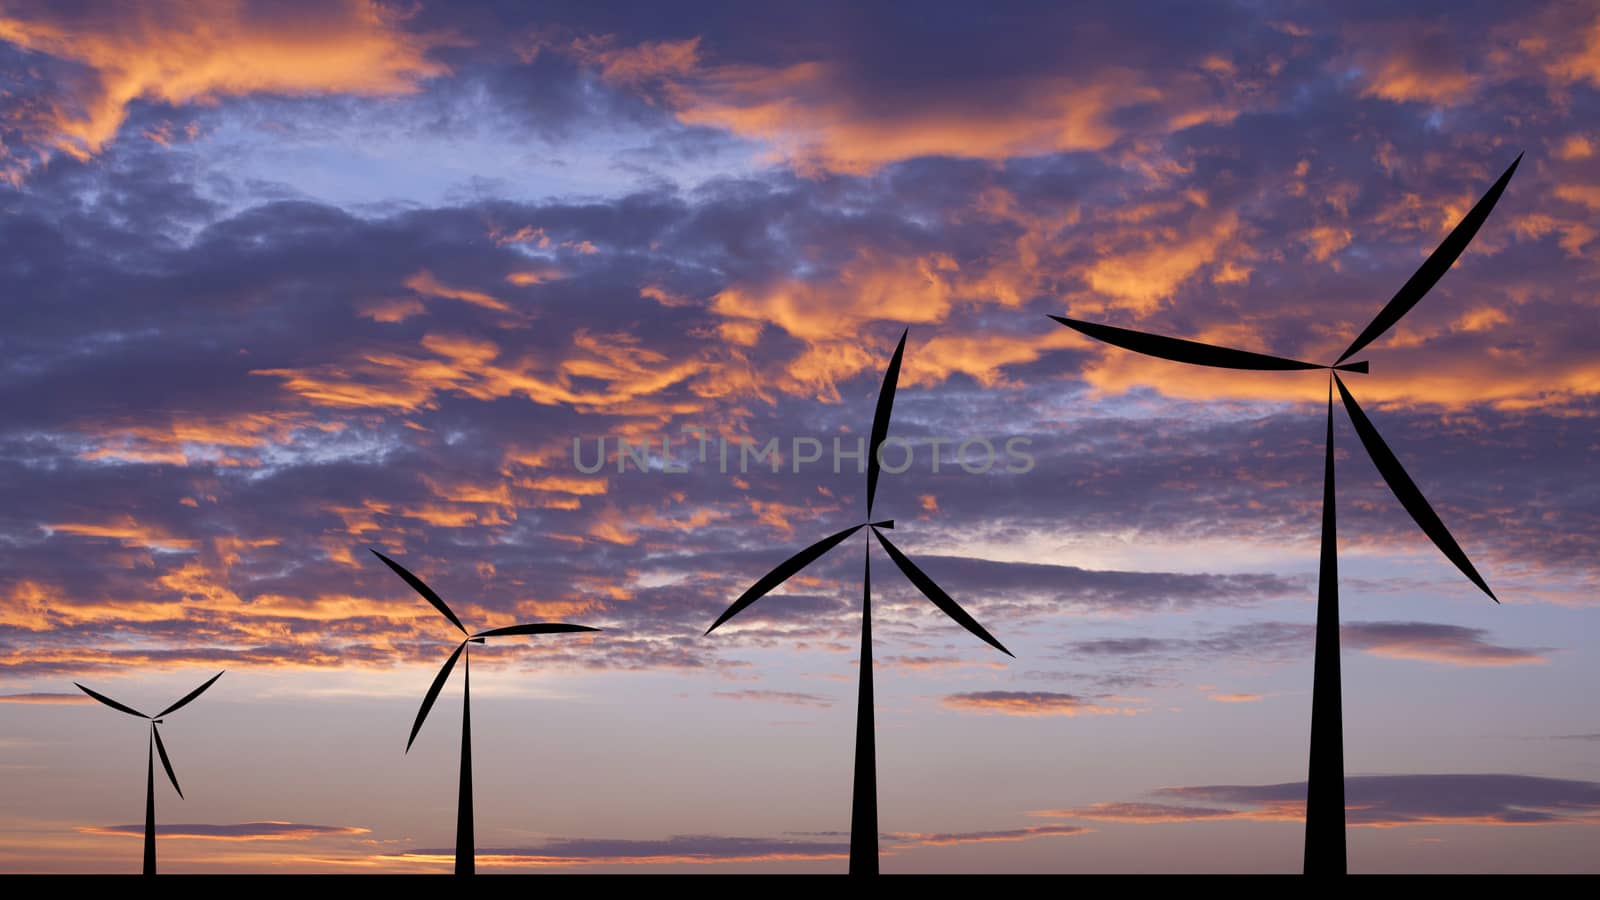  Wind turbine silhouette sunset or sunrise economic system backg by 2nix